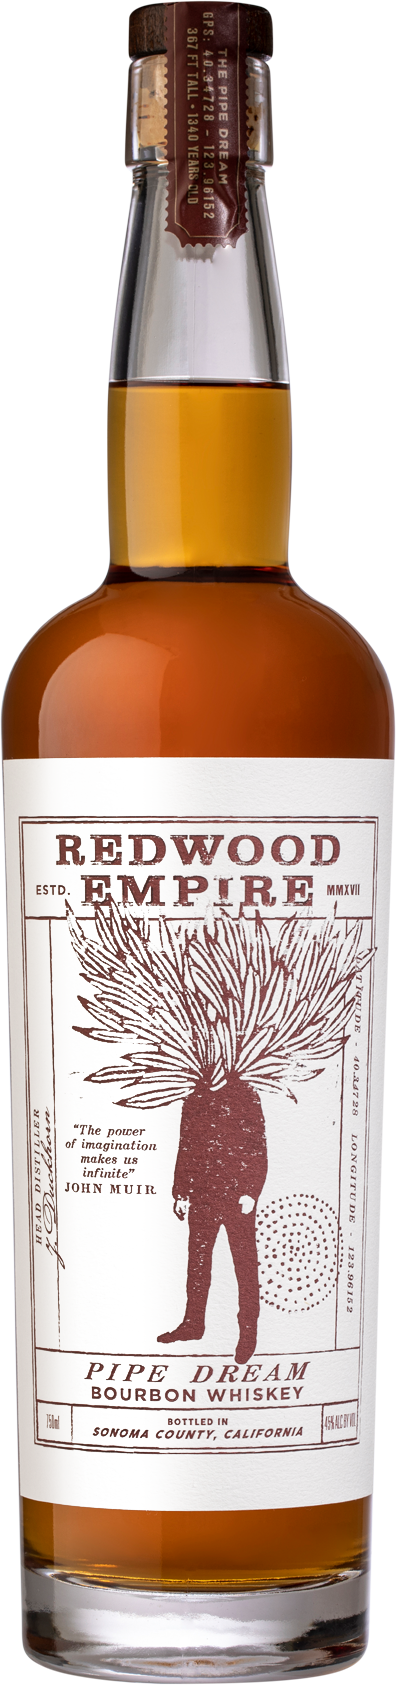 Buy Redwood Empire Pipe Dream Bourbon Whiskey Online -Craft City